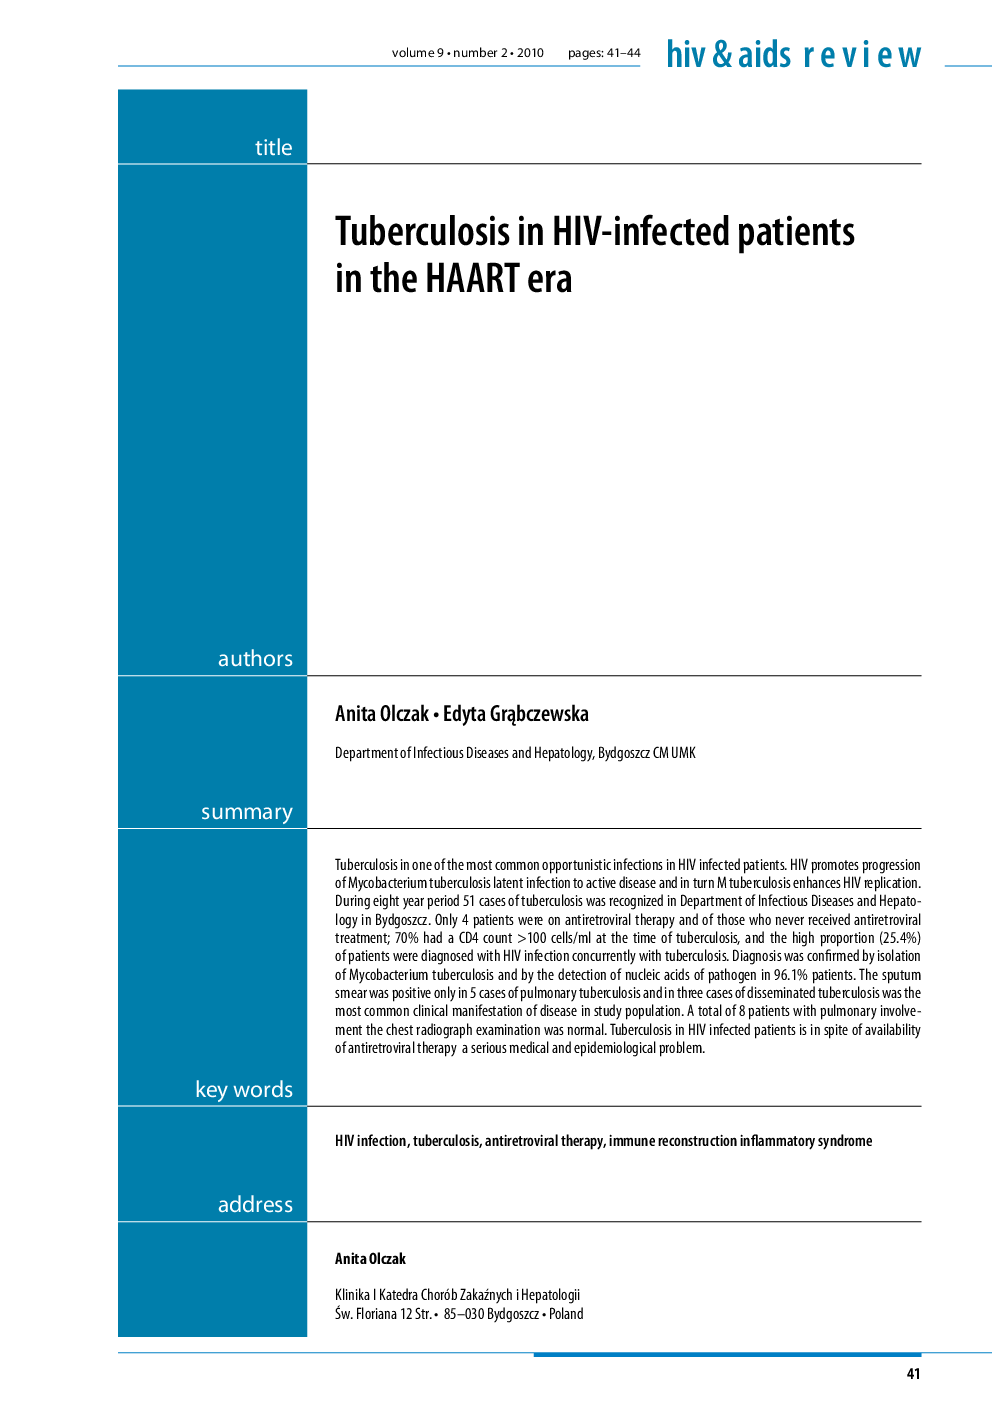 Tuberculosis in HIV-infected patients in the HAART era